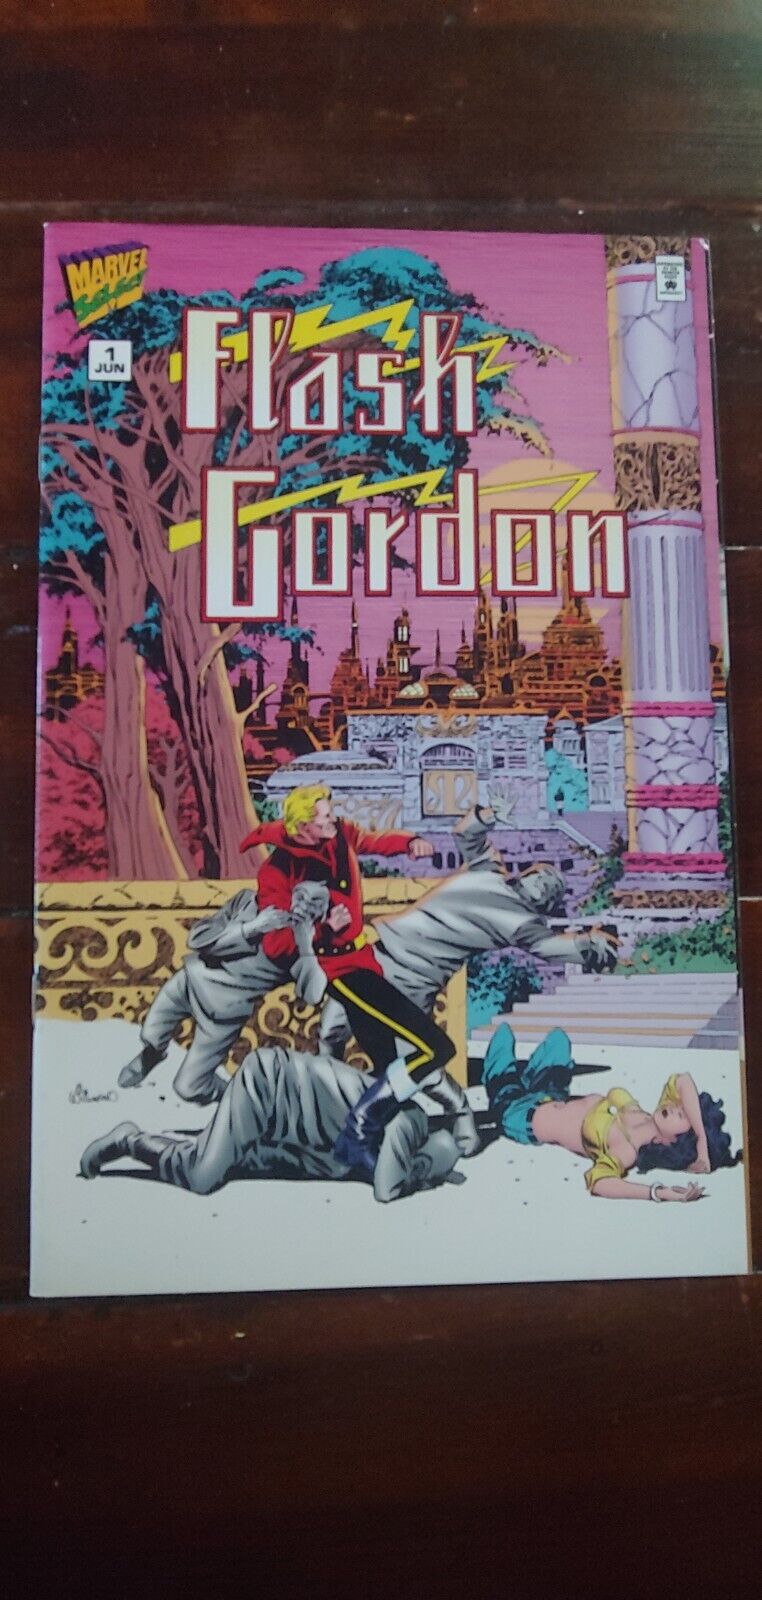 Flash Gordon #1 by Marvel, 1995 -NM, very nice Al Williamson art